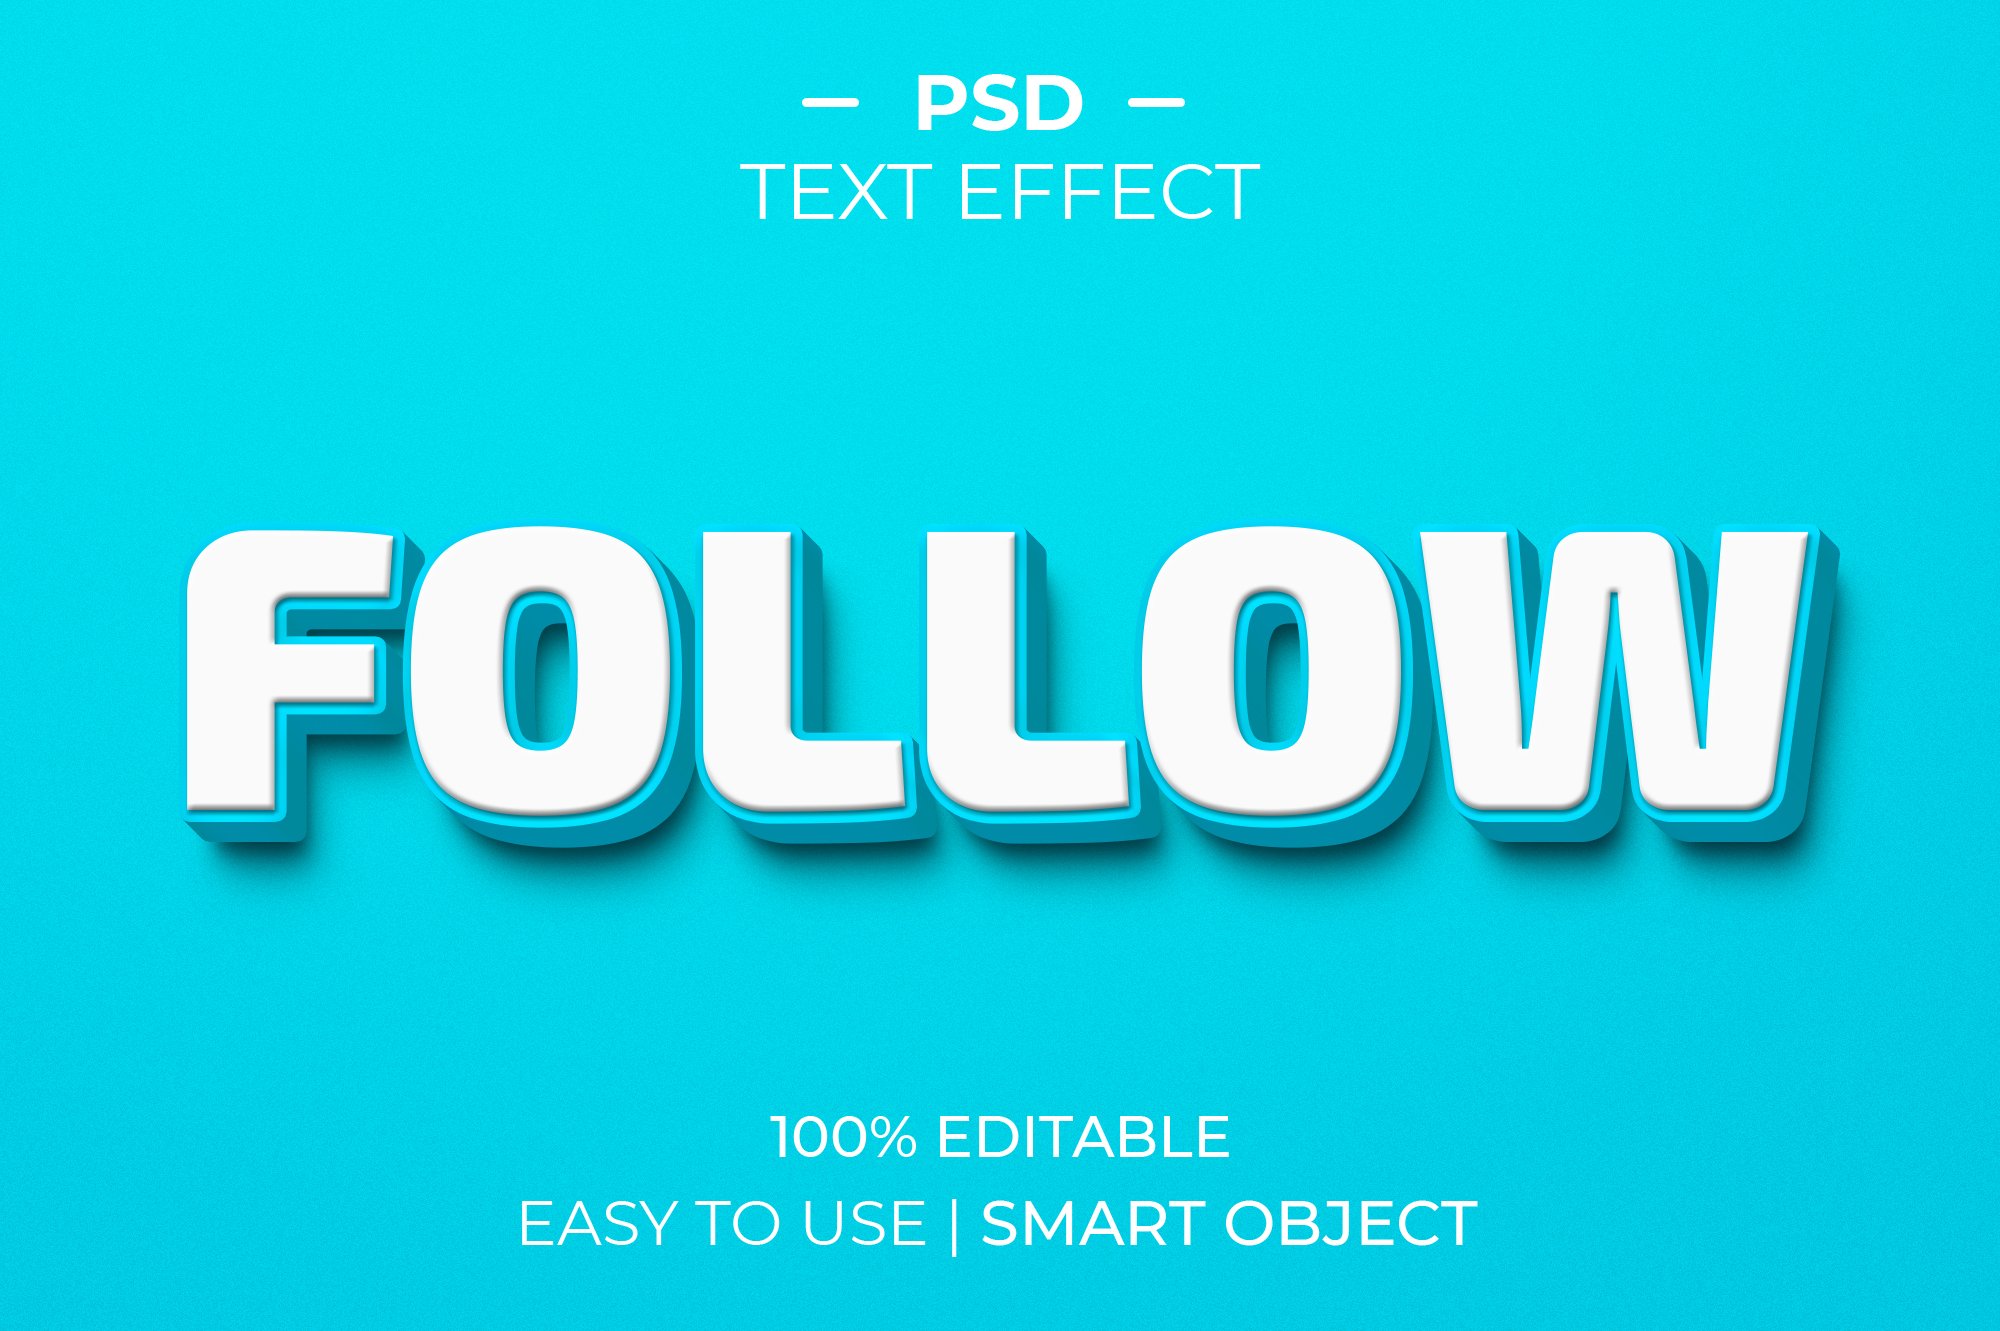 Follow 3D Text Effectcover image.